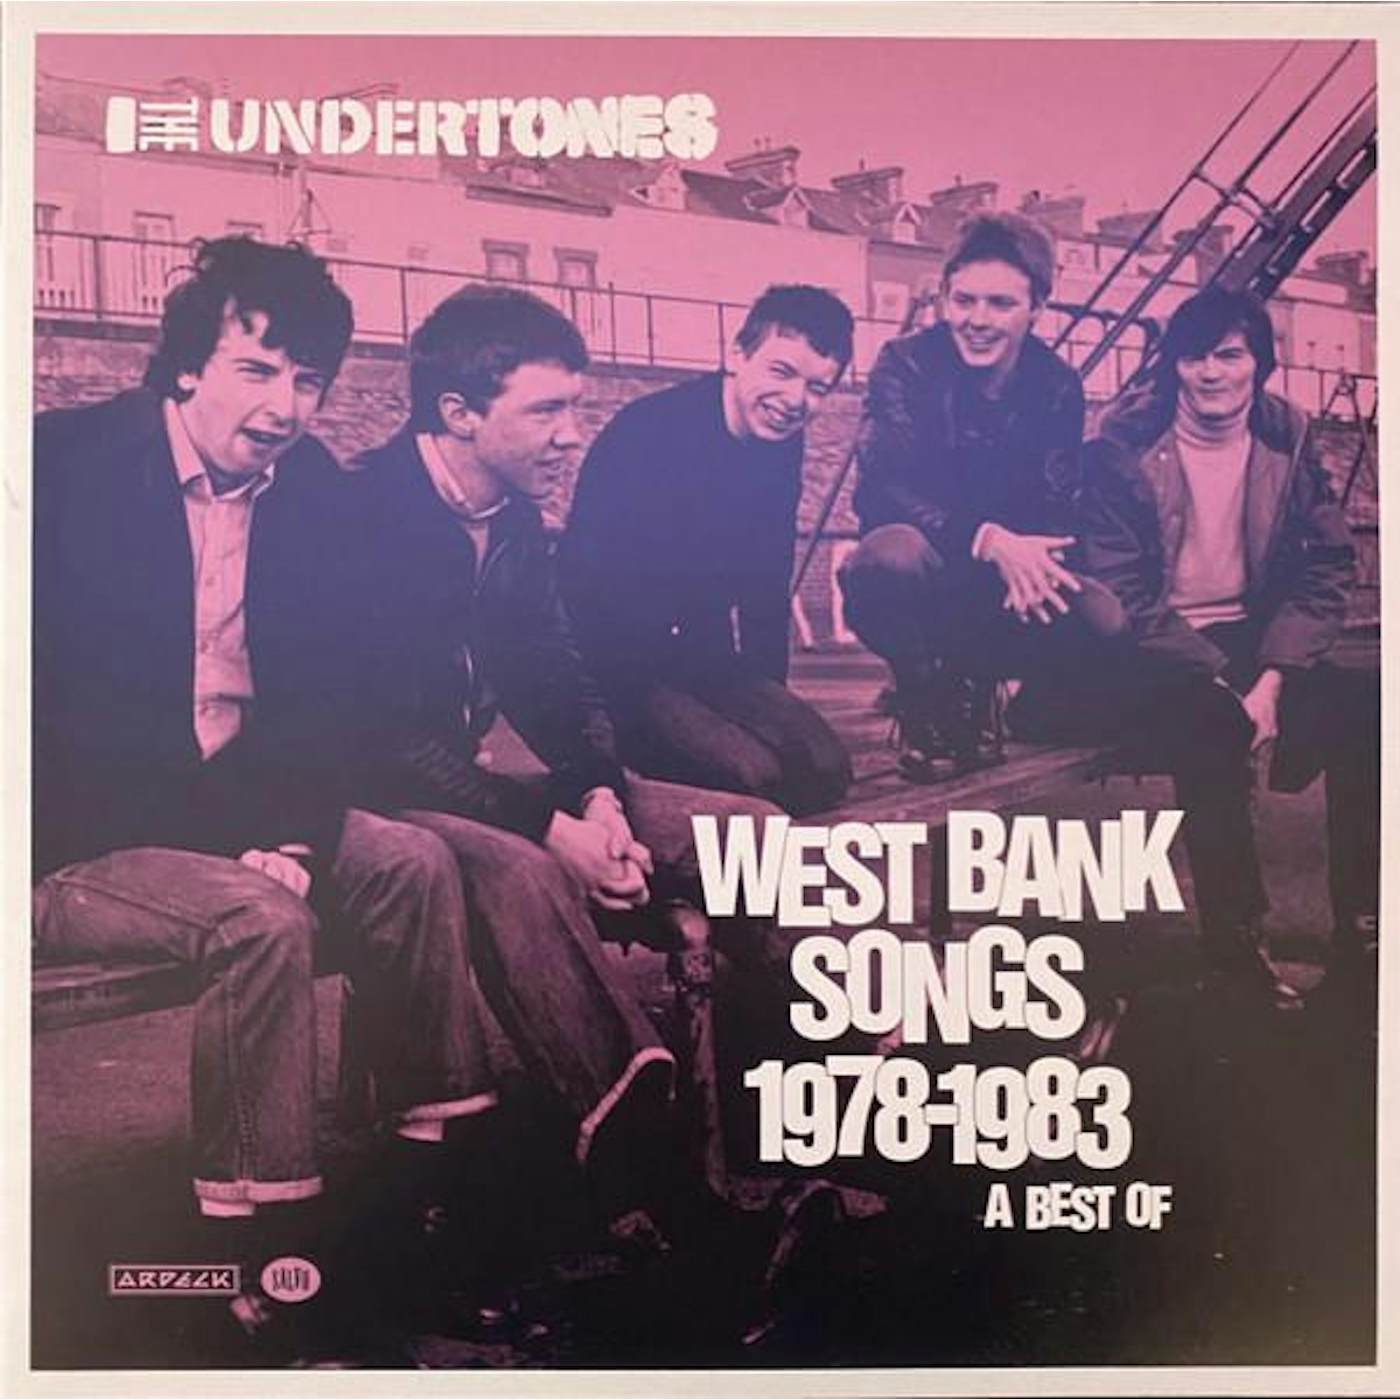 The Undertones WEST BANK SONGS 1978 1983 Vinyl Record